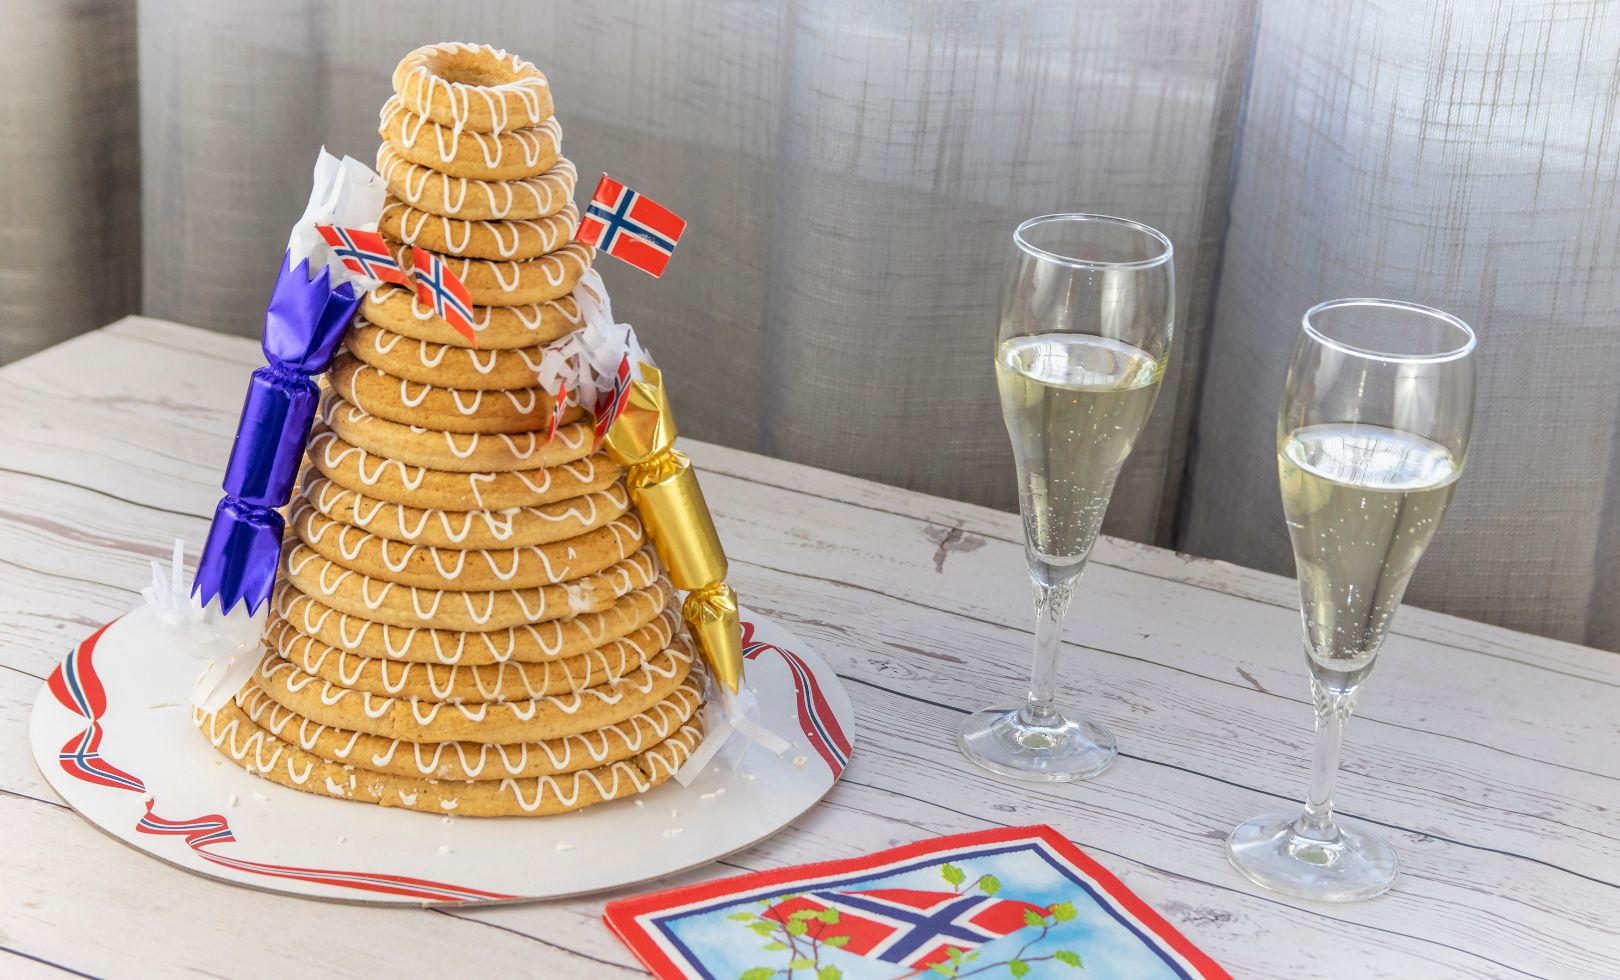 Kransekake, the Norwegian celebration cake.